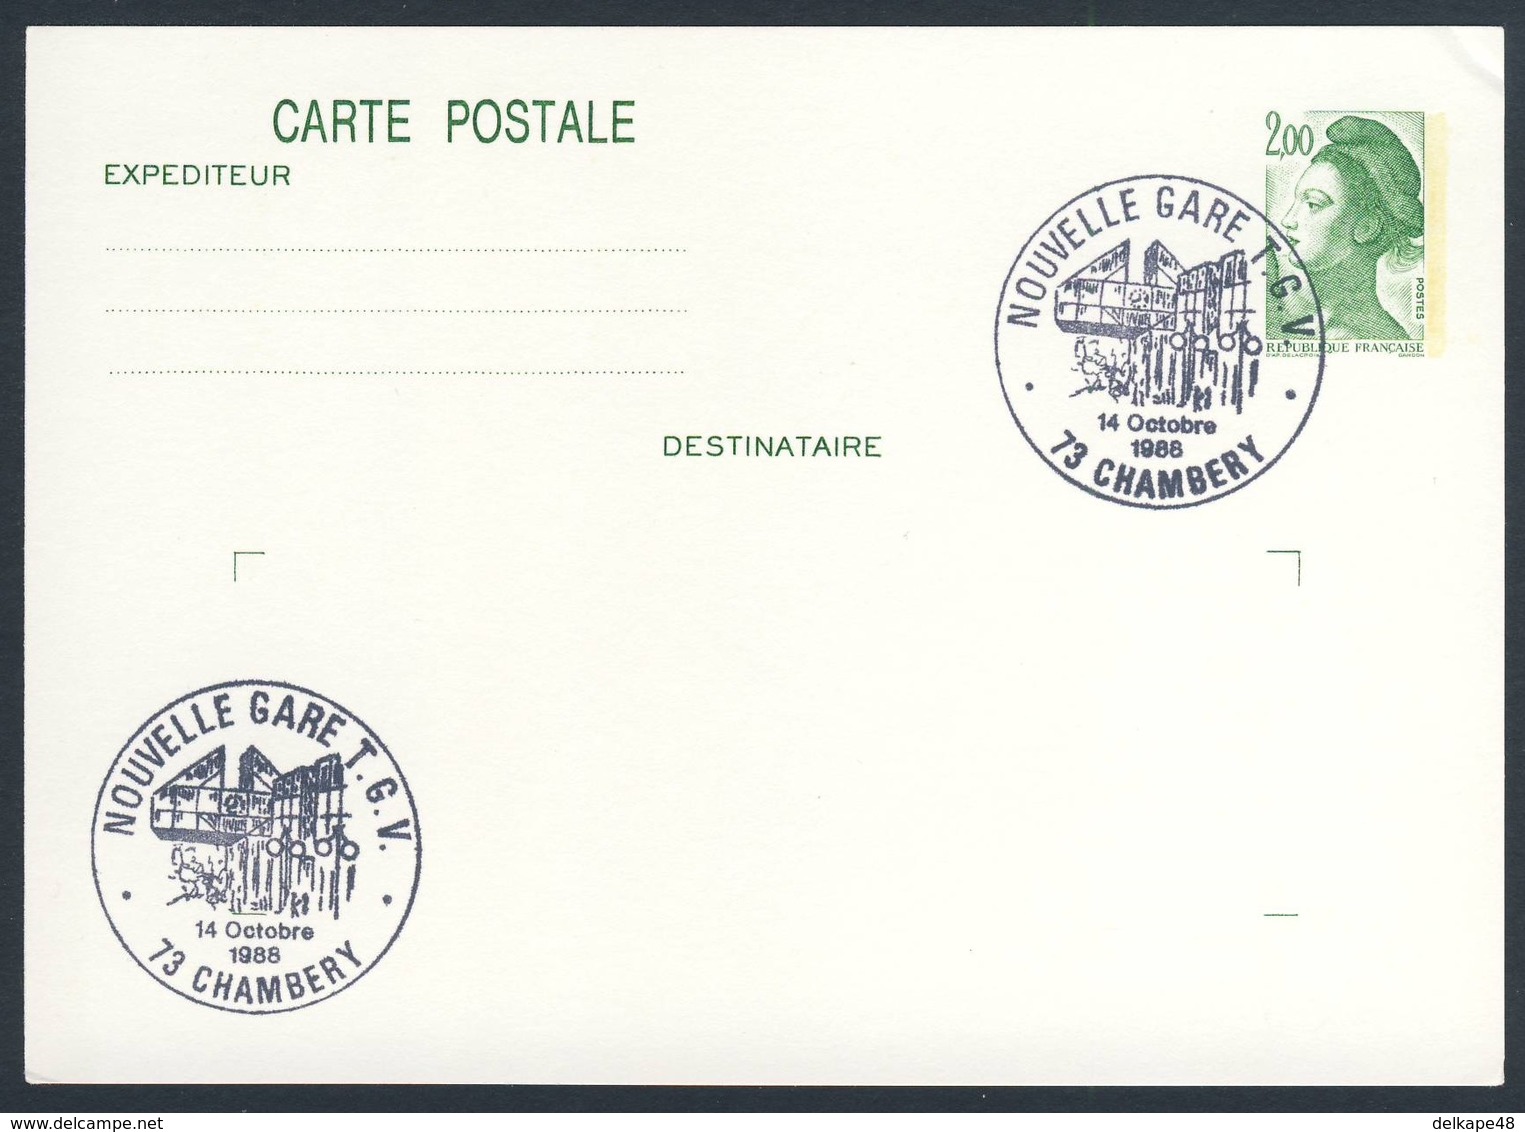 France Rep. Française 1988 Card / Karte / Carte Postale - Nouvelle Gare TGV, Chambery / Railway Station / Bahnhof - Treinen